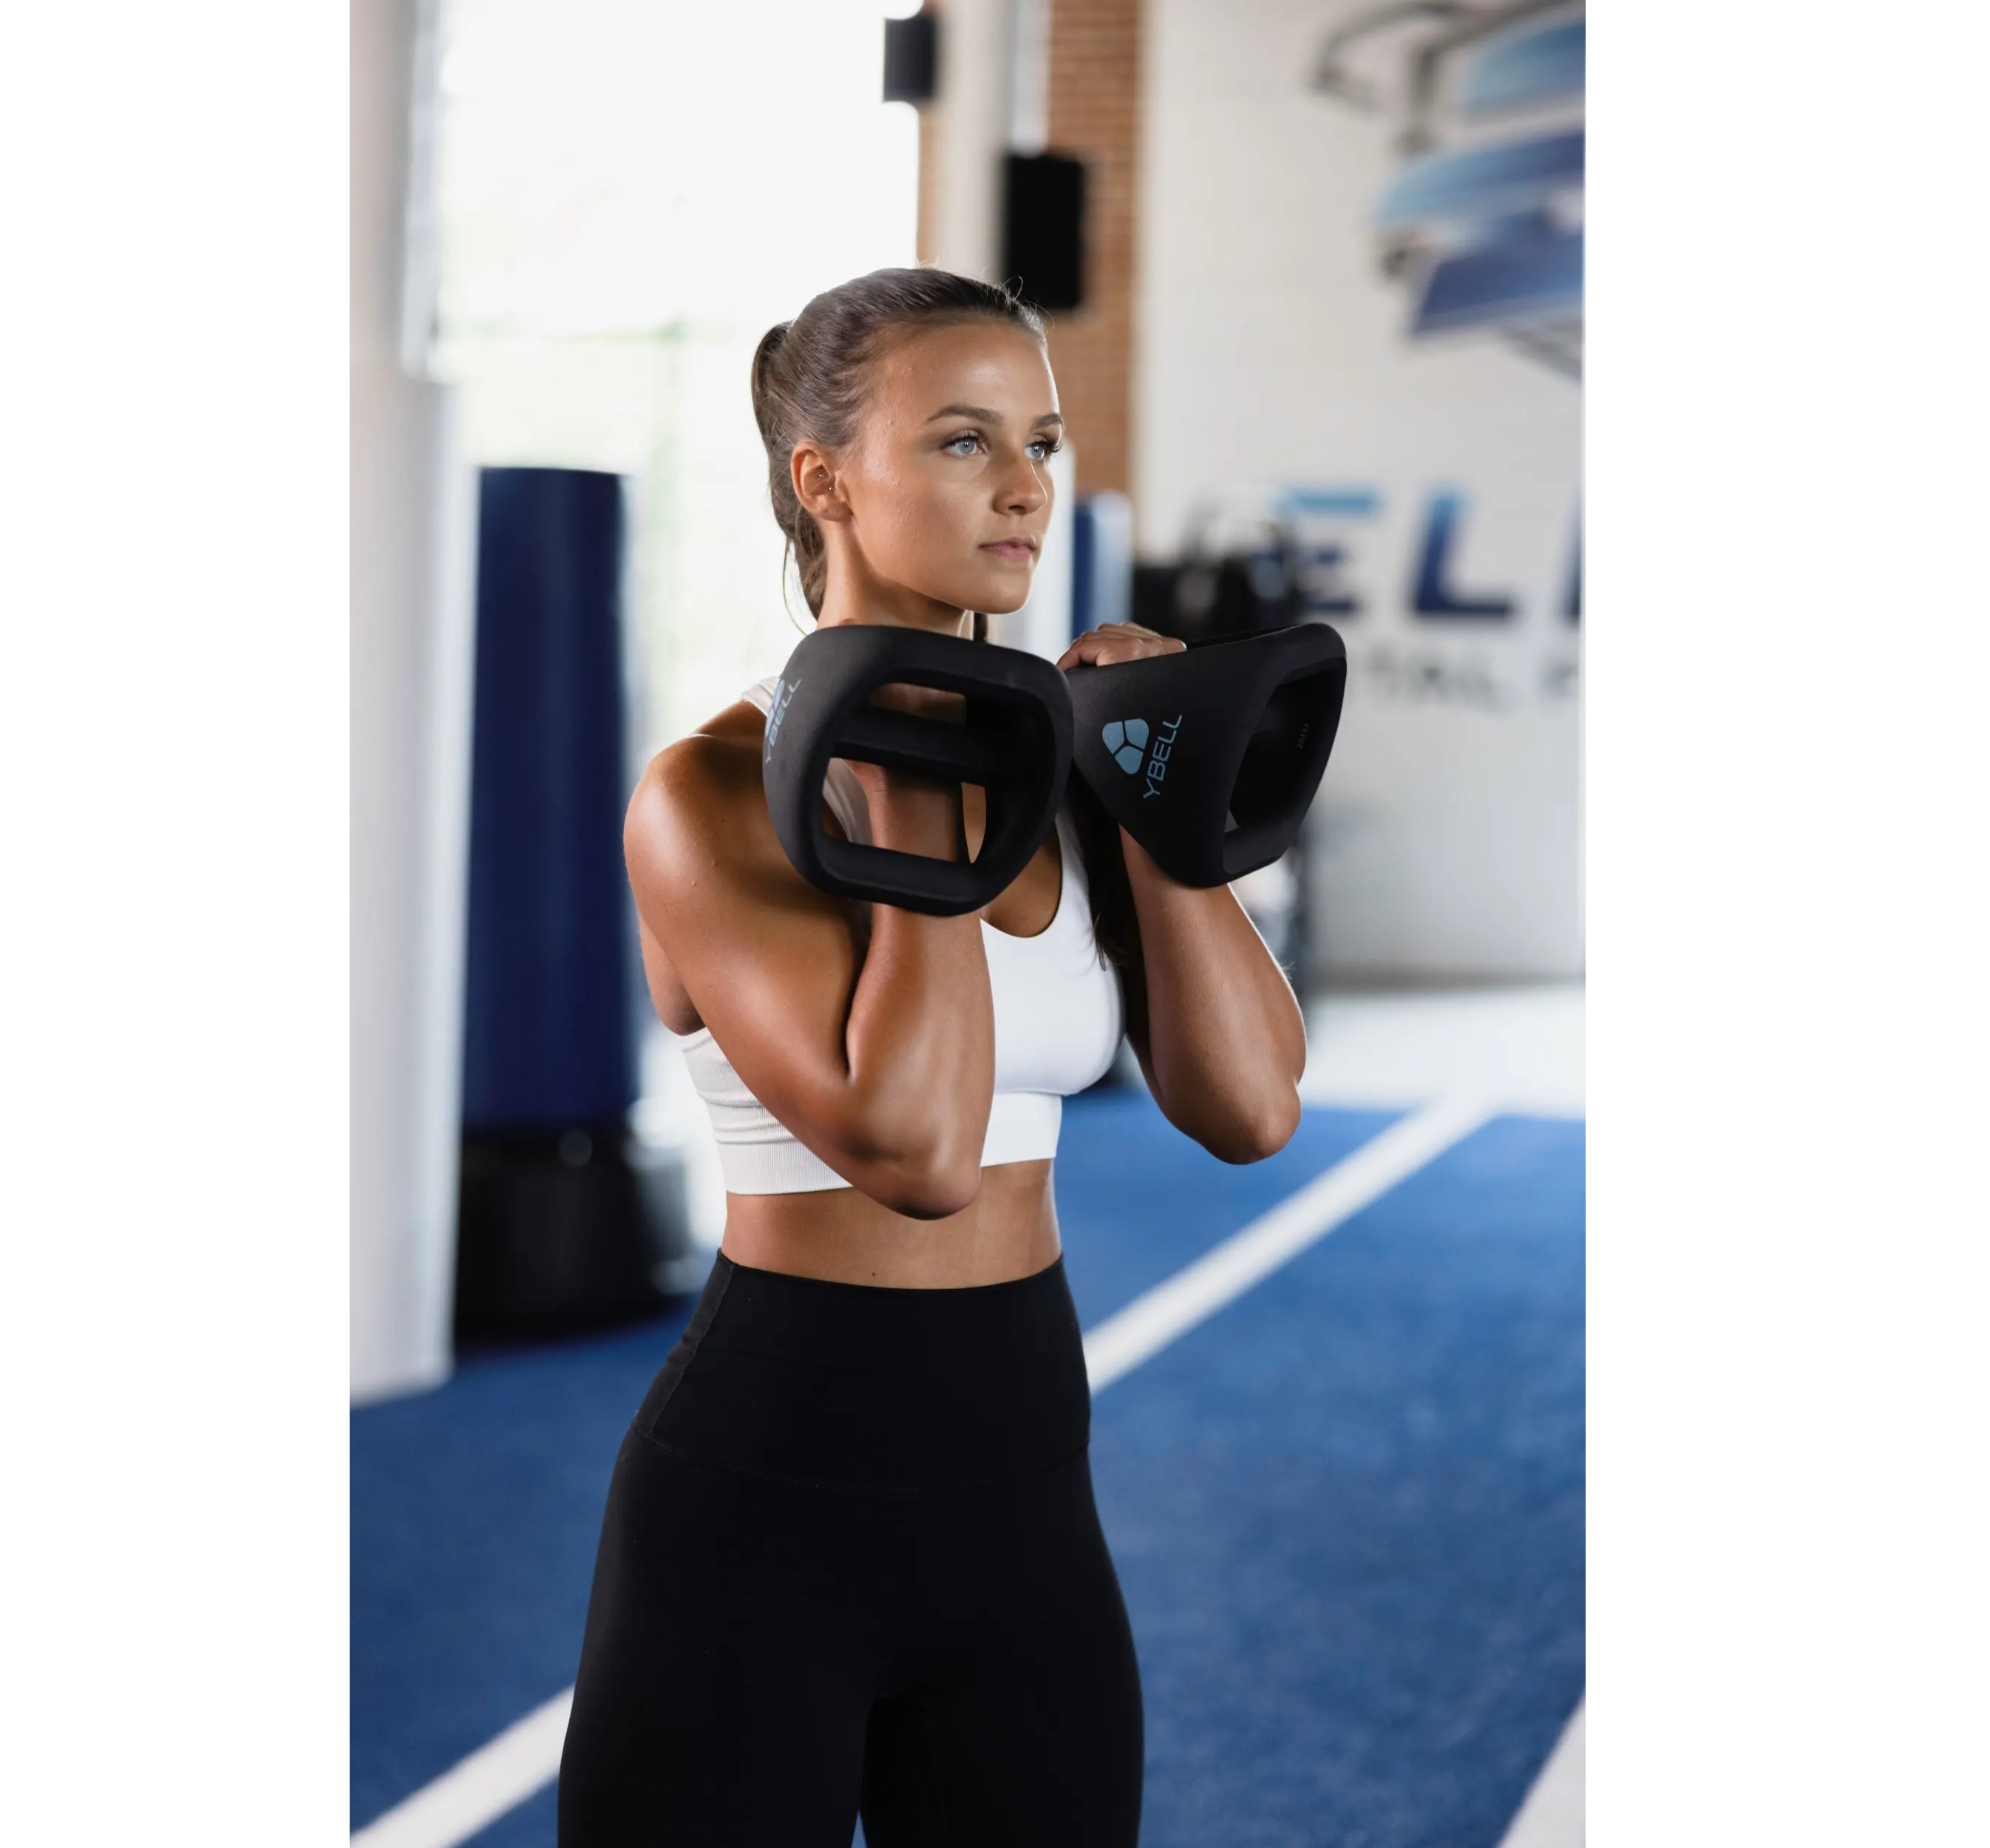 A female athlete hlding YBells using a rack grip inside a fitness studio.